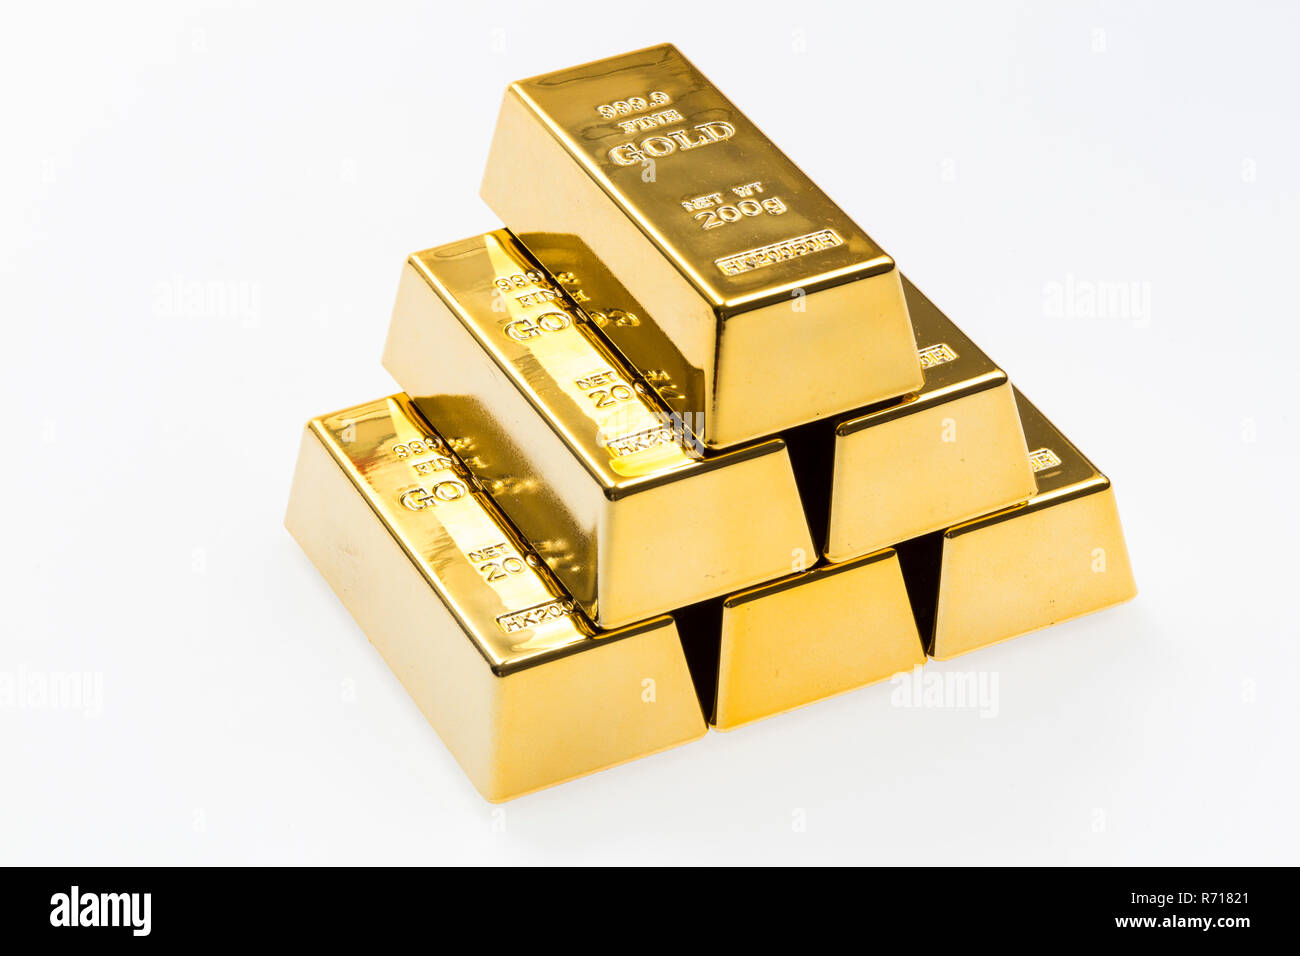 pyramid-of-200g-gold-bars-9999-pure-gold-R71821.jpg